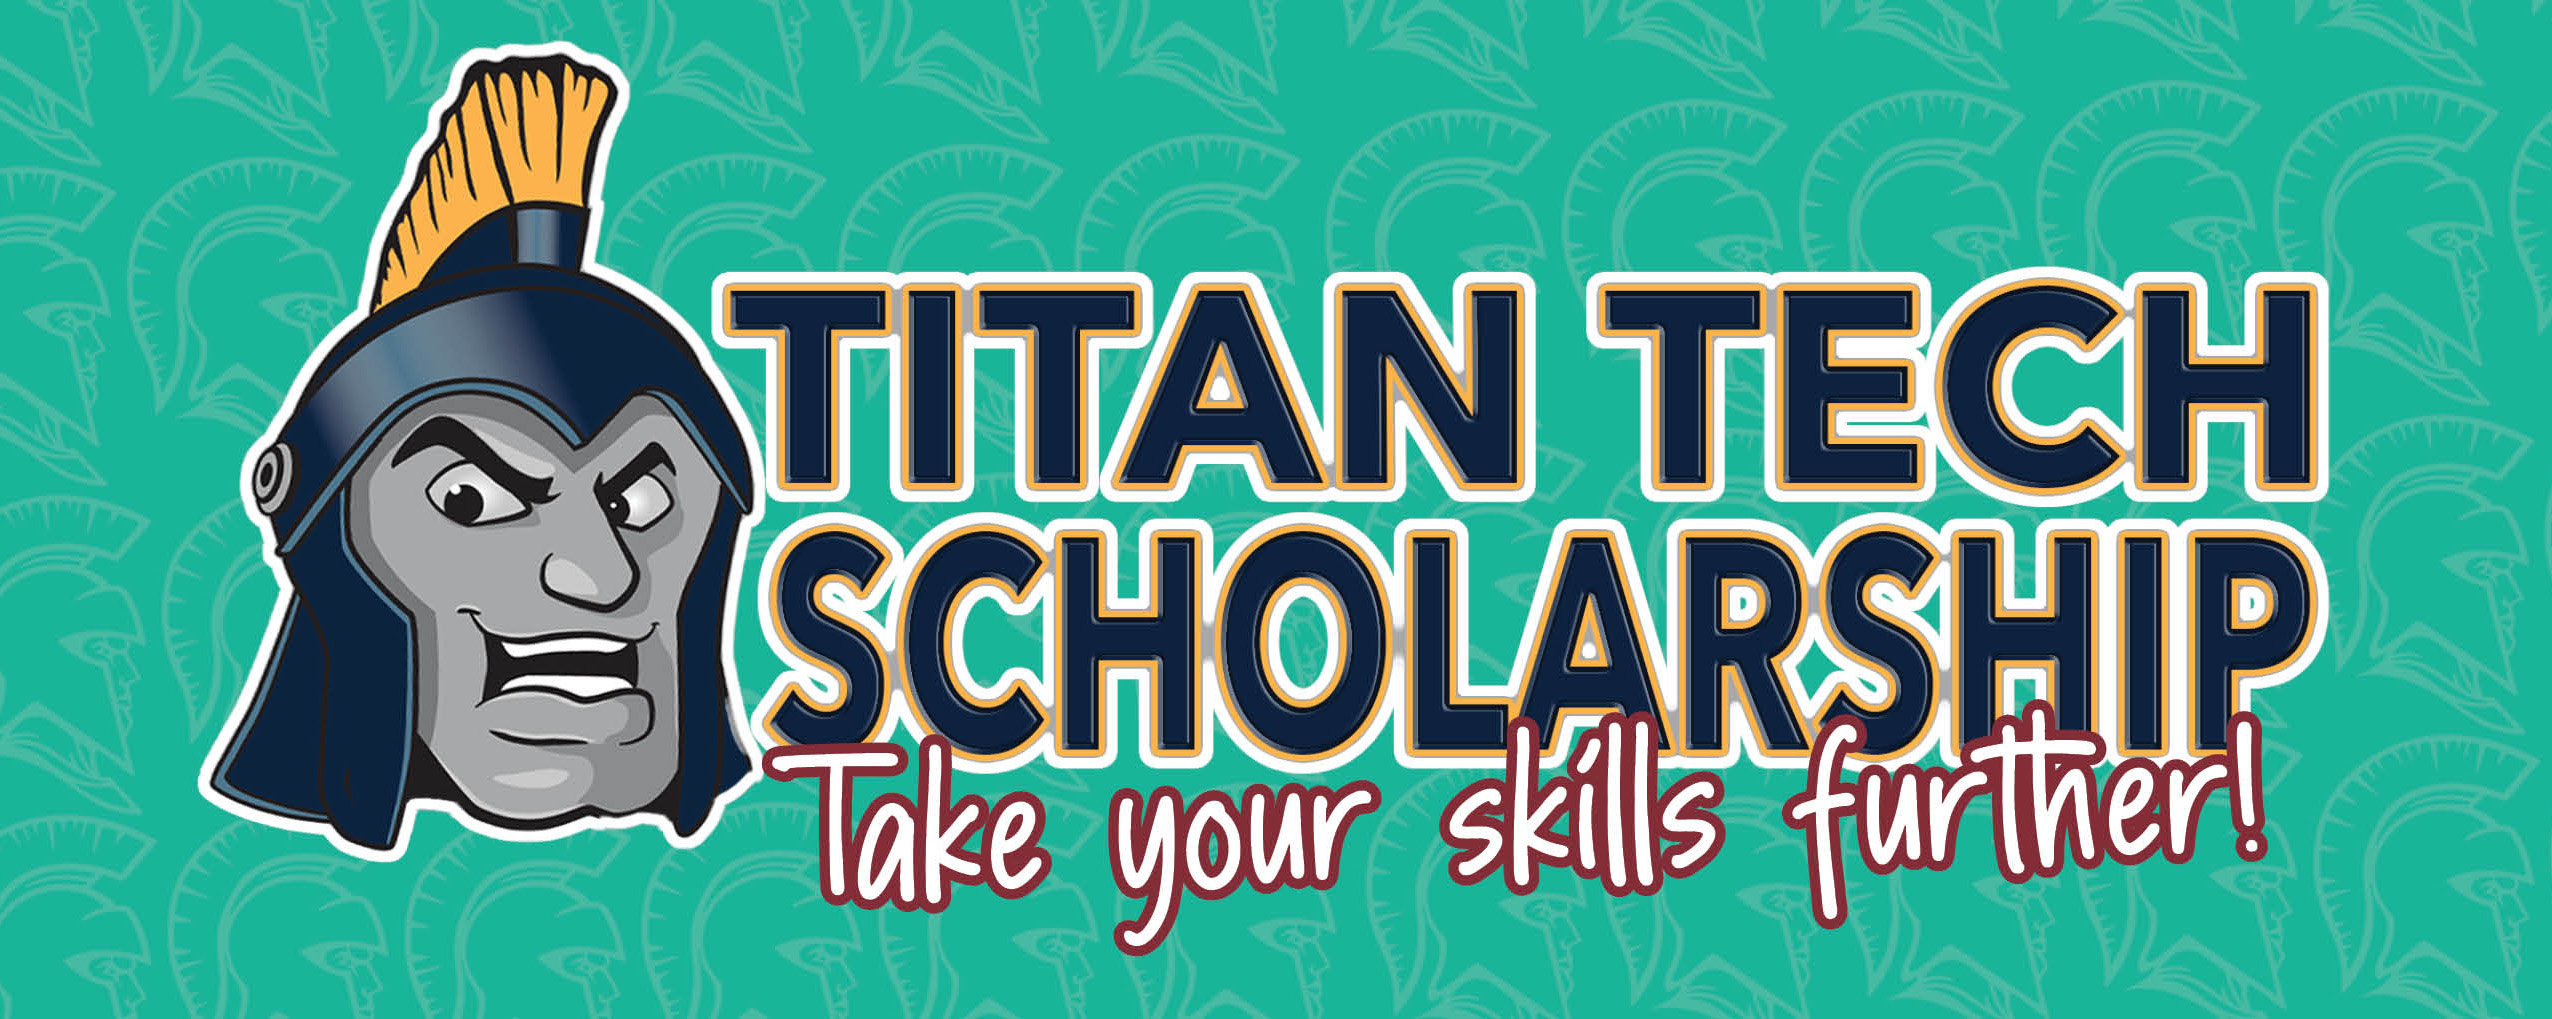 Titan Tech Scholarship landing page rotator